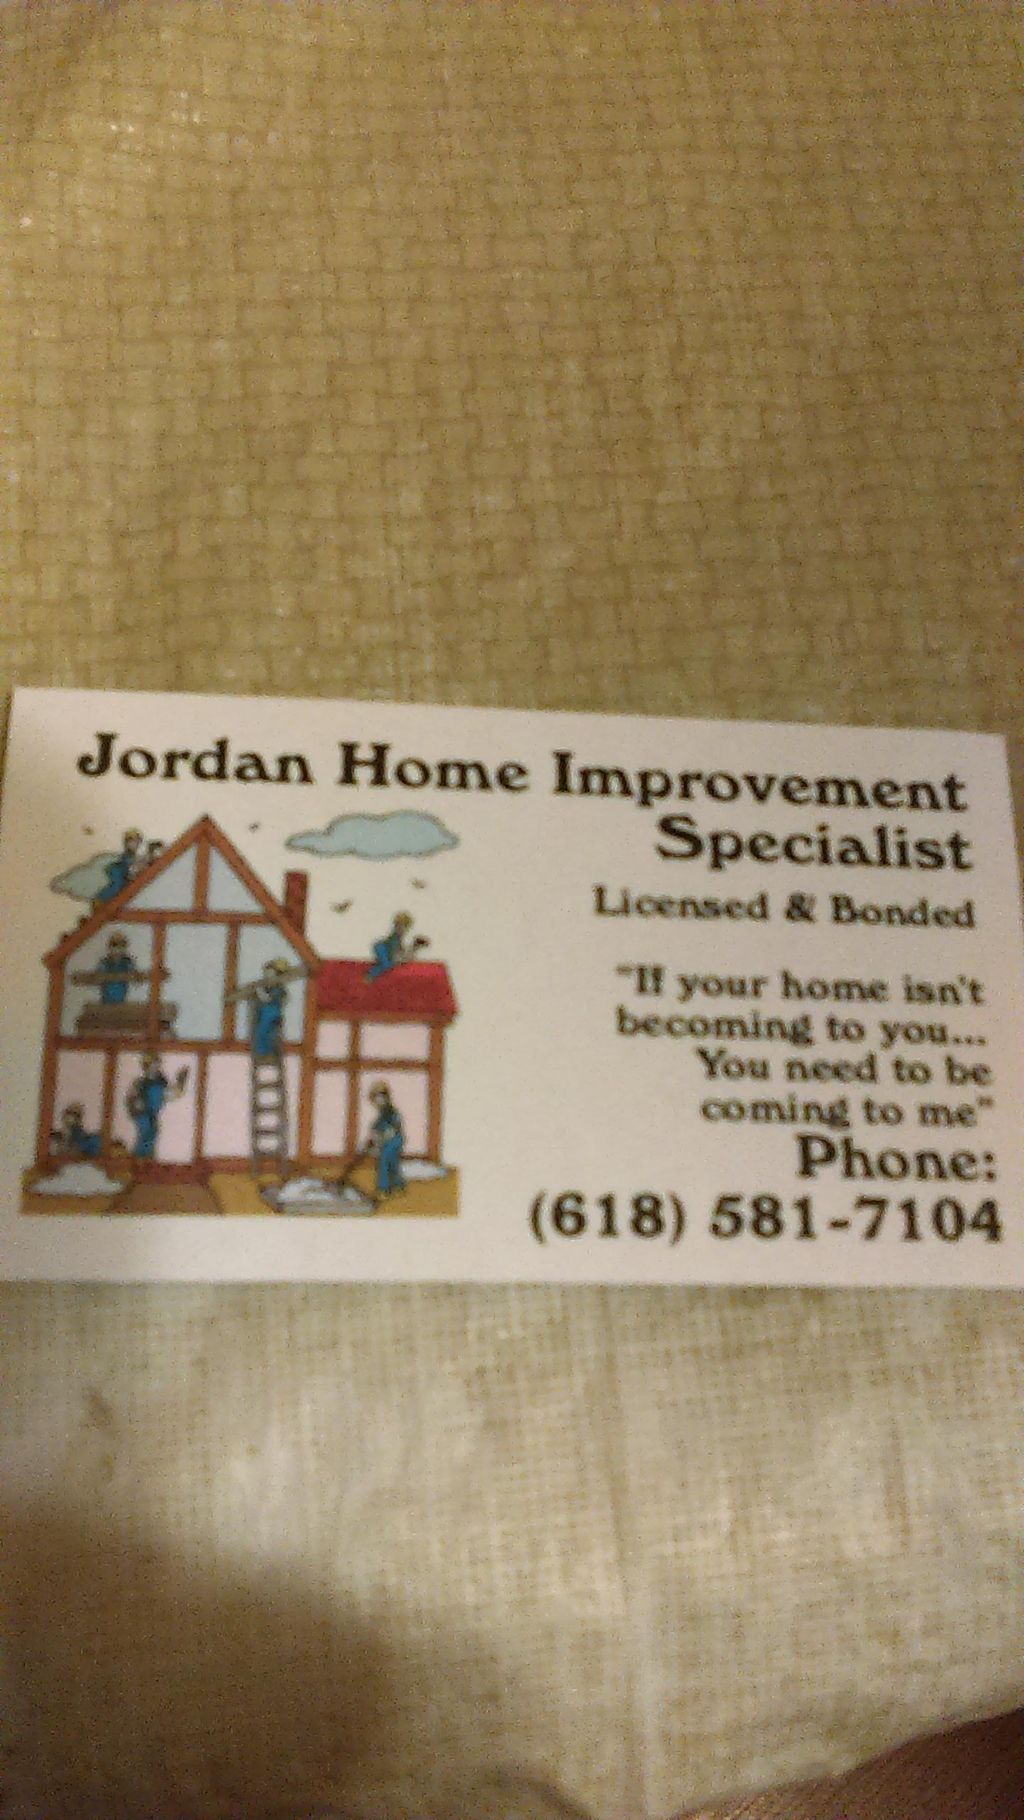 Jordan Home Improvememt